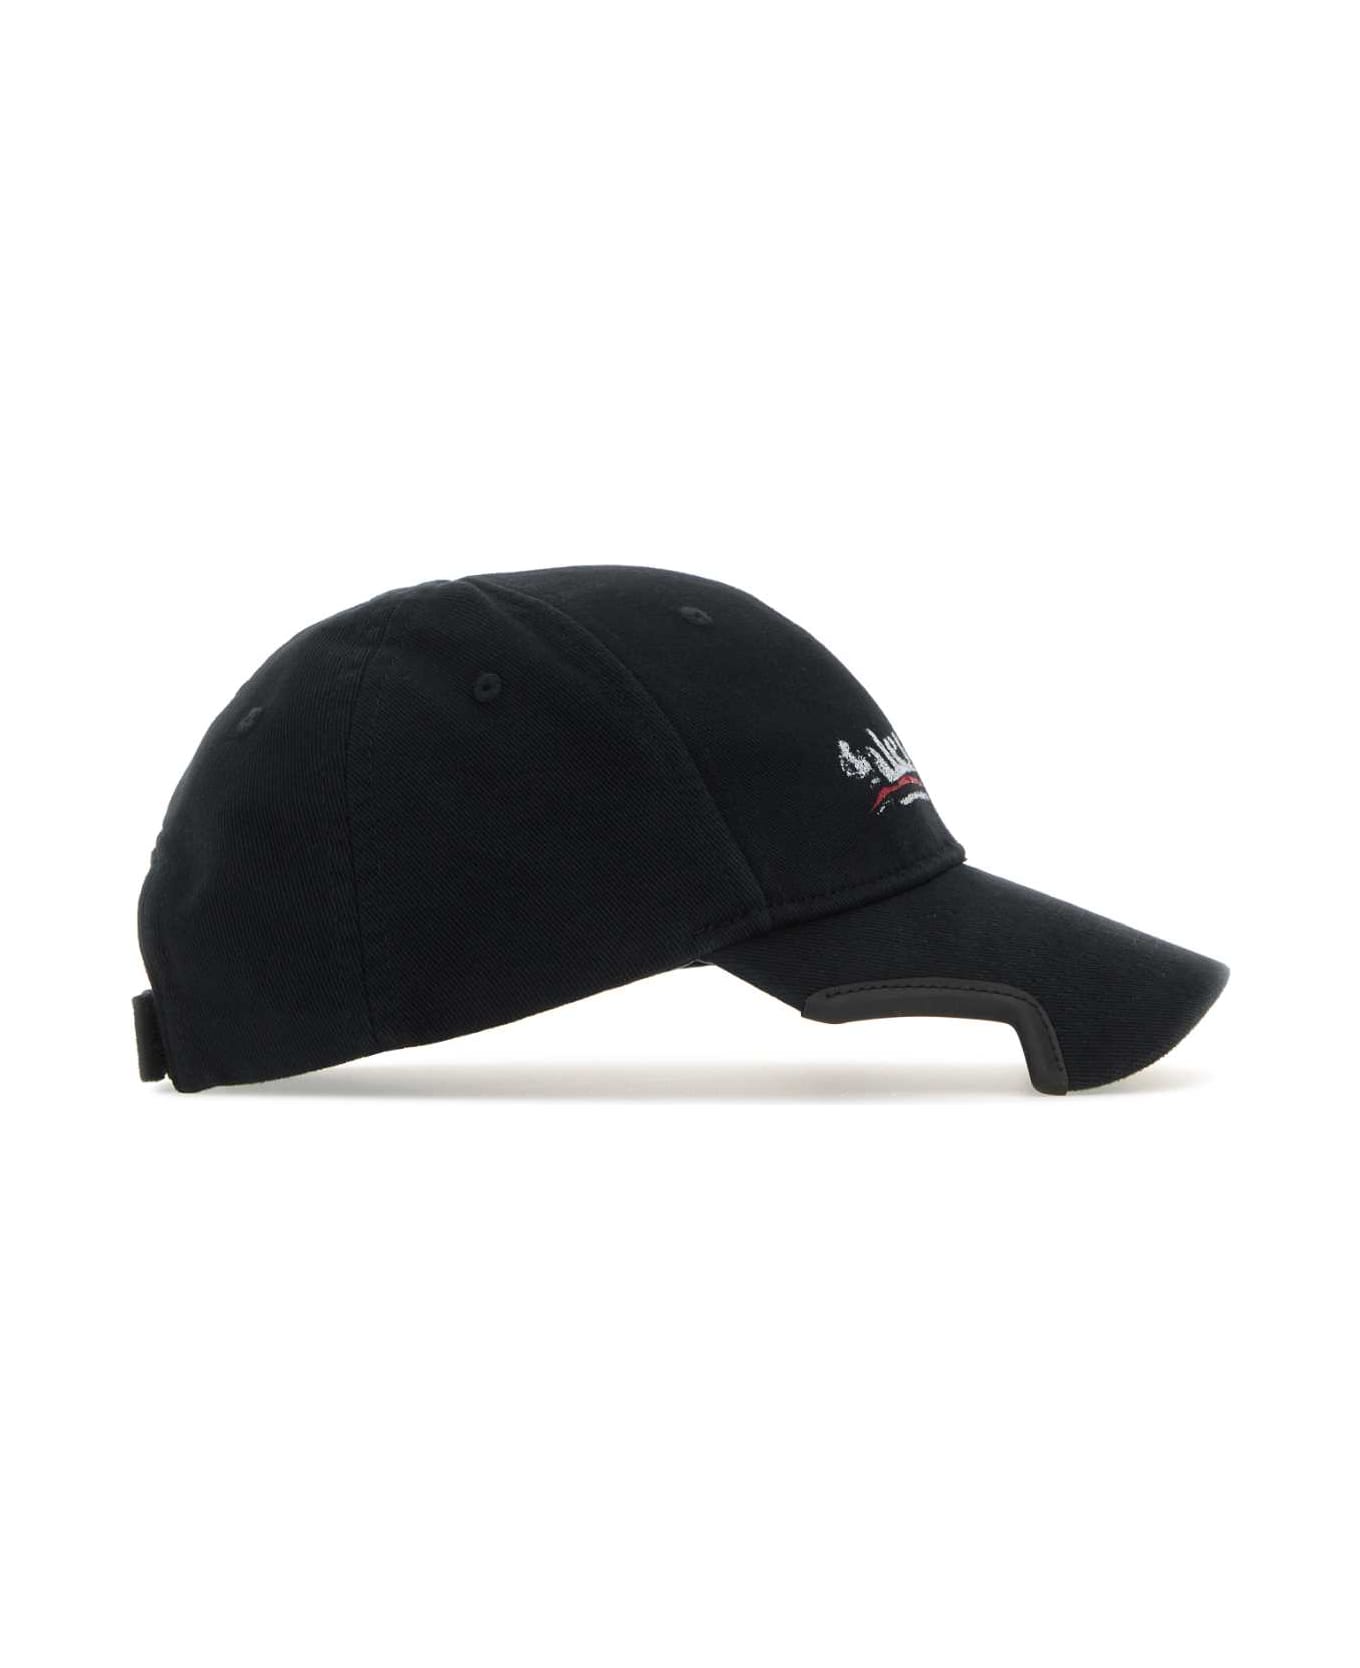 Balenciaga Black Drill Politico Stencil Baseball Cap - BLACKWHITE 帽子